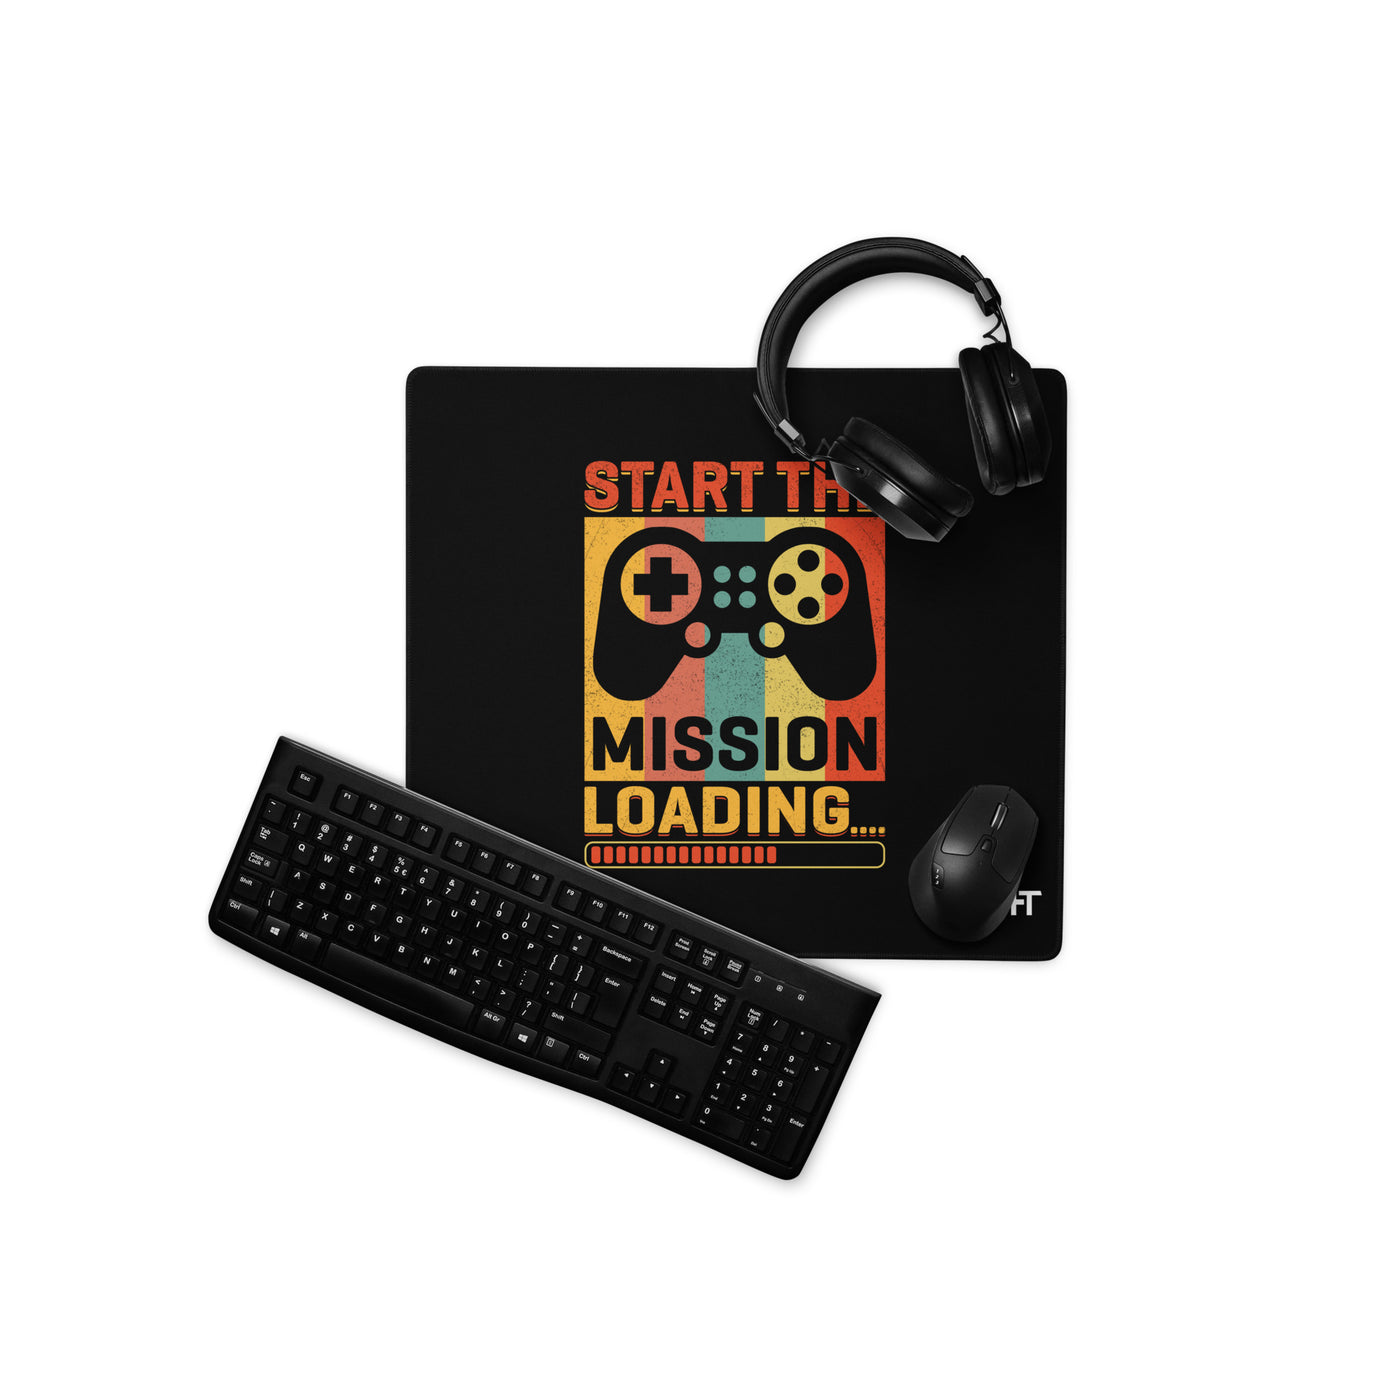 Start the Mission Loading - Desk Mat